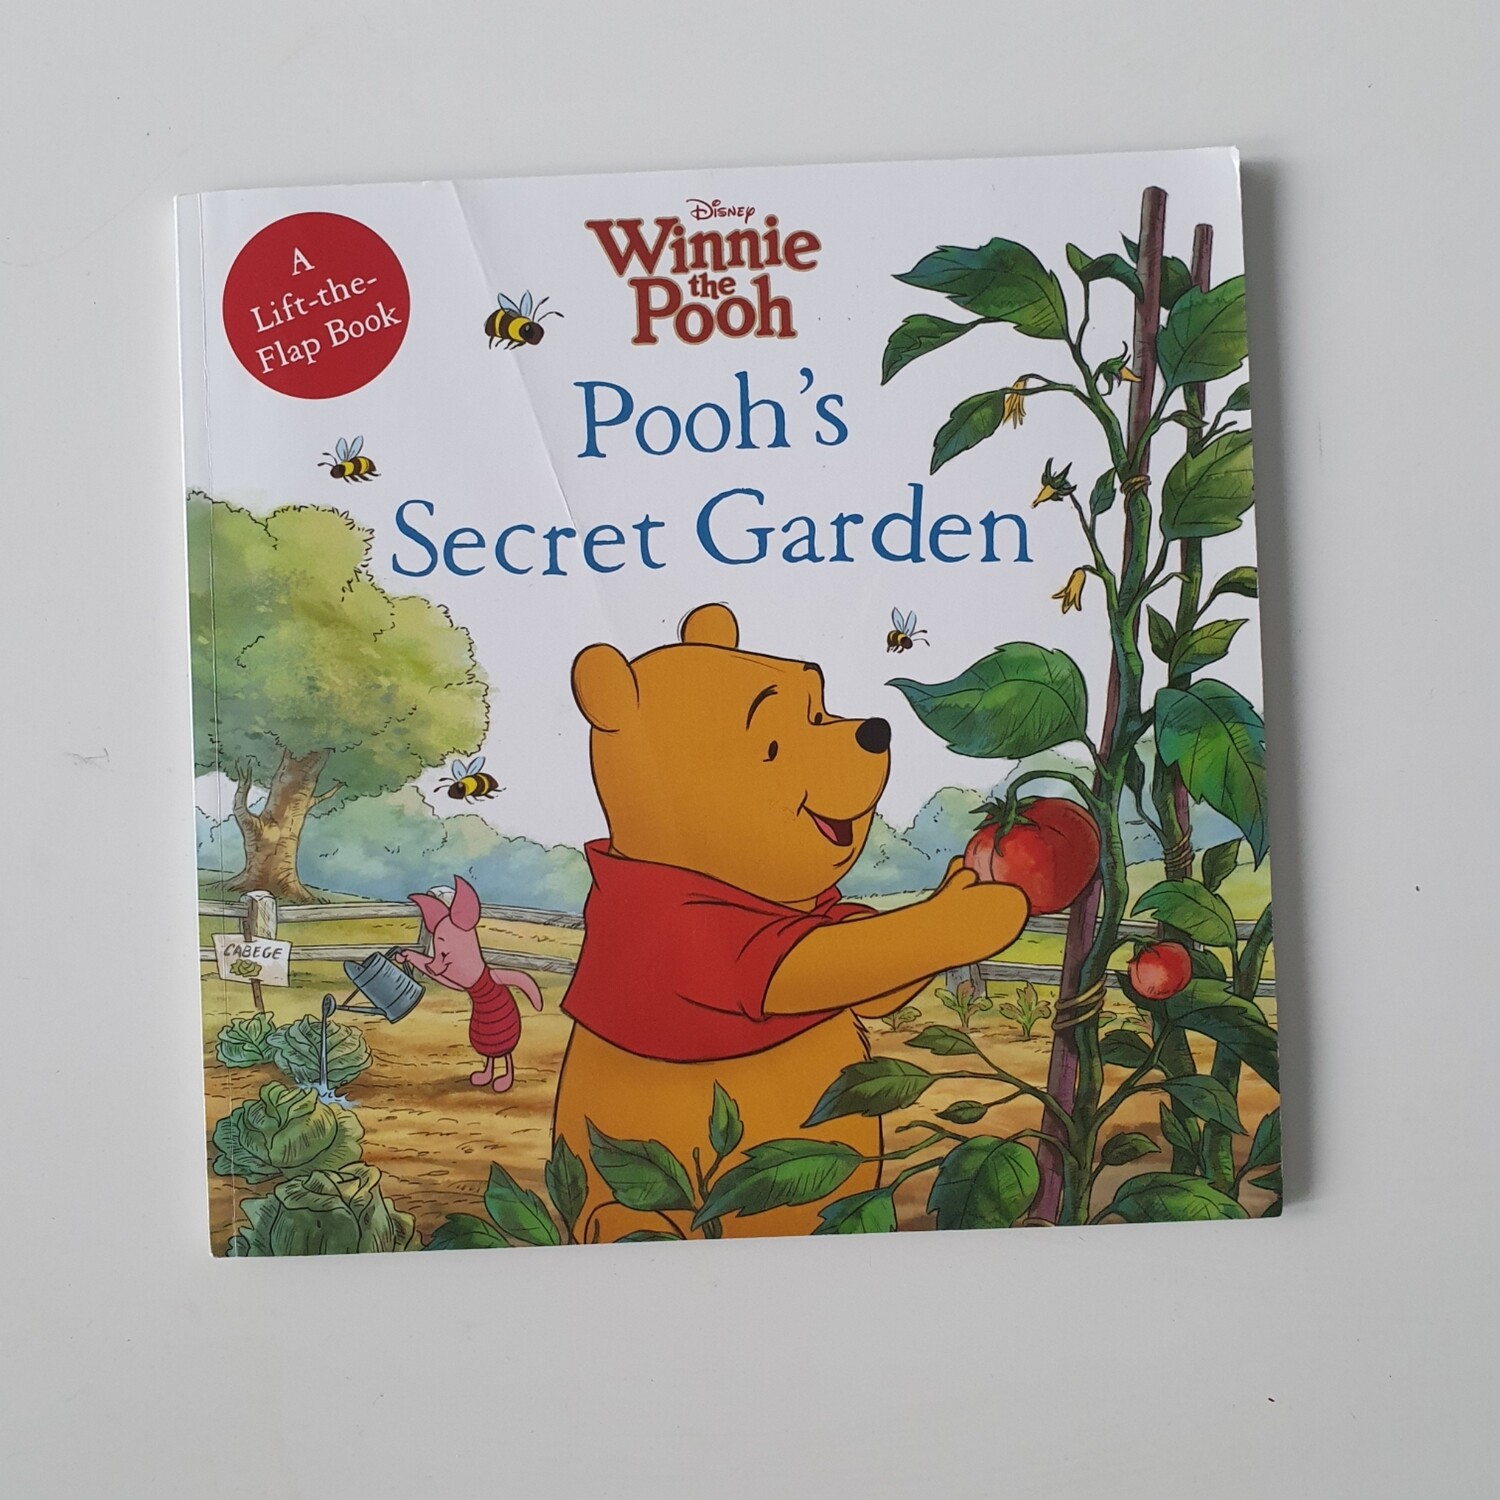 Winnie the Pooh's Secret Garden Notebook - made from a paperback book